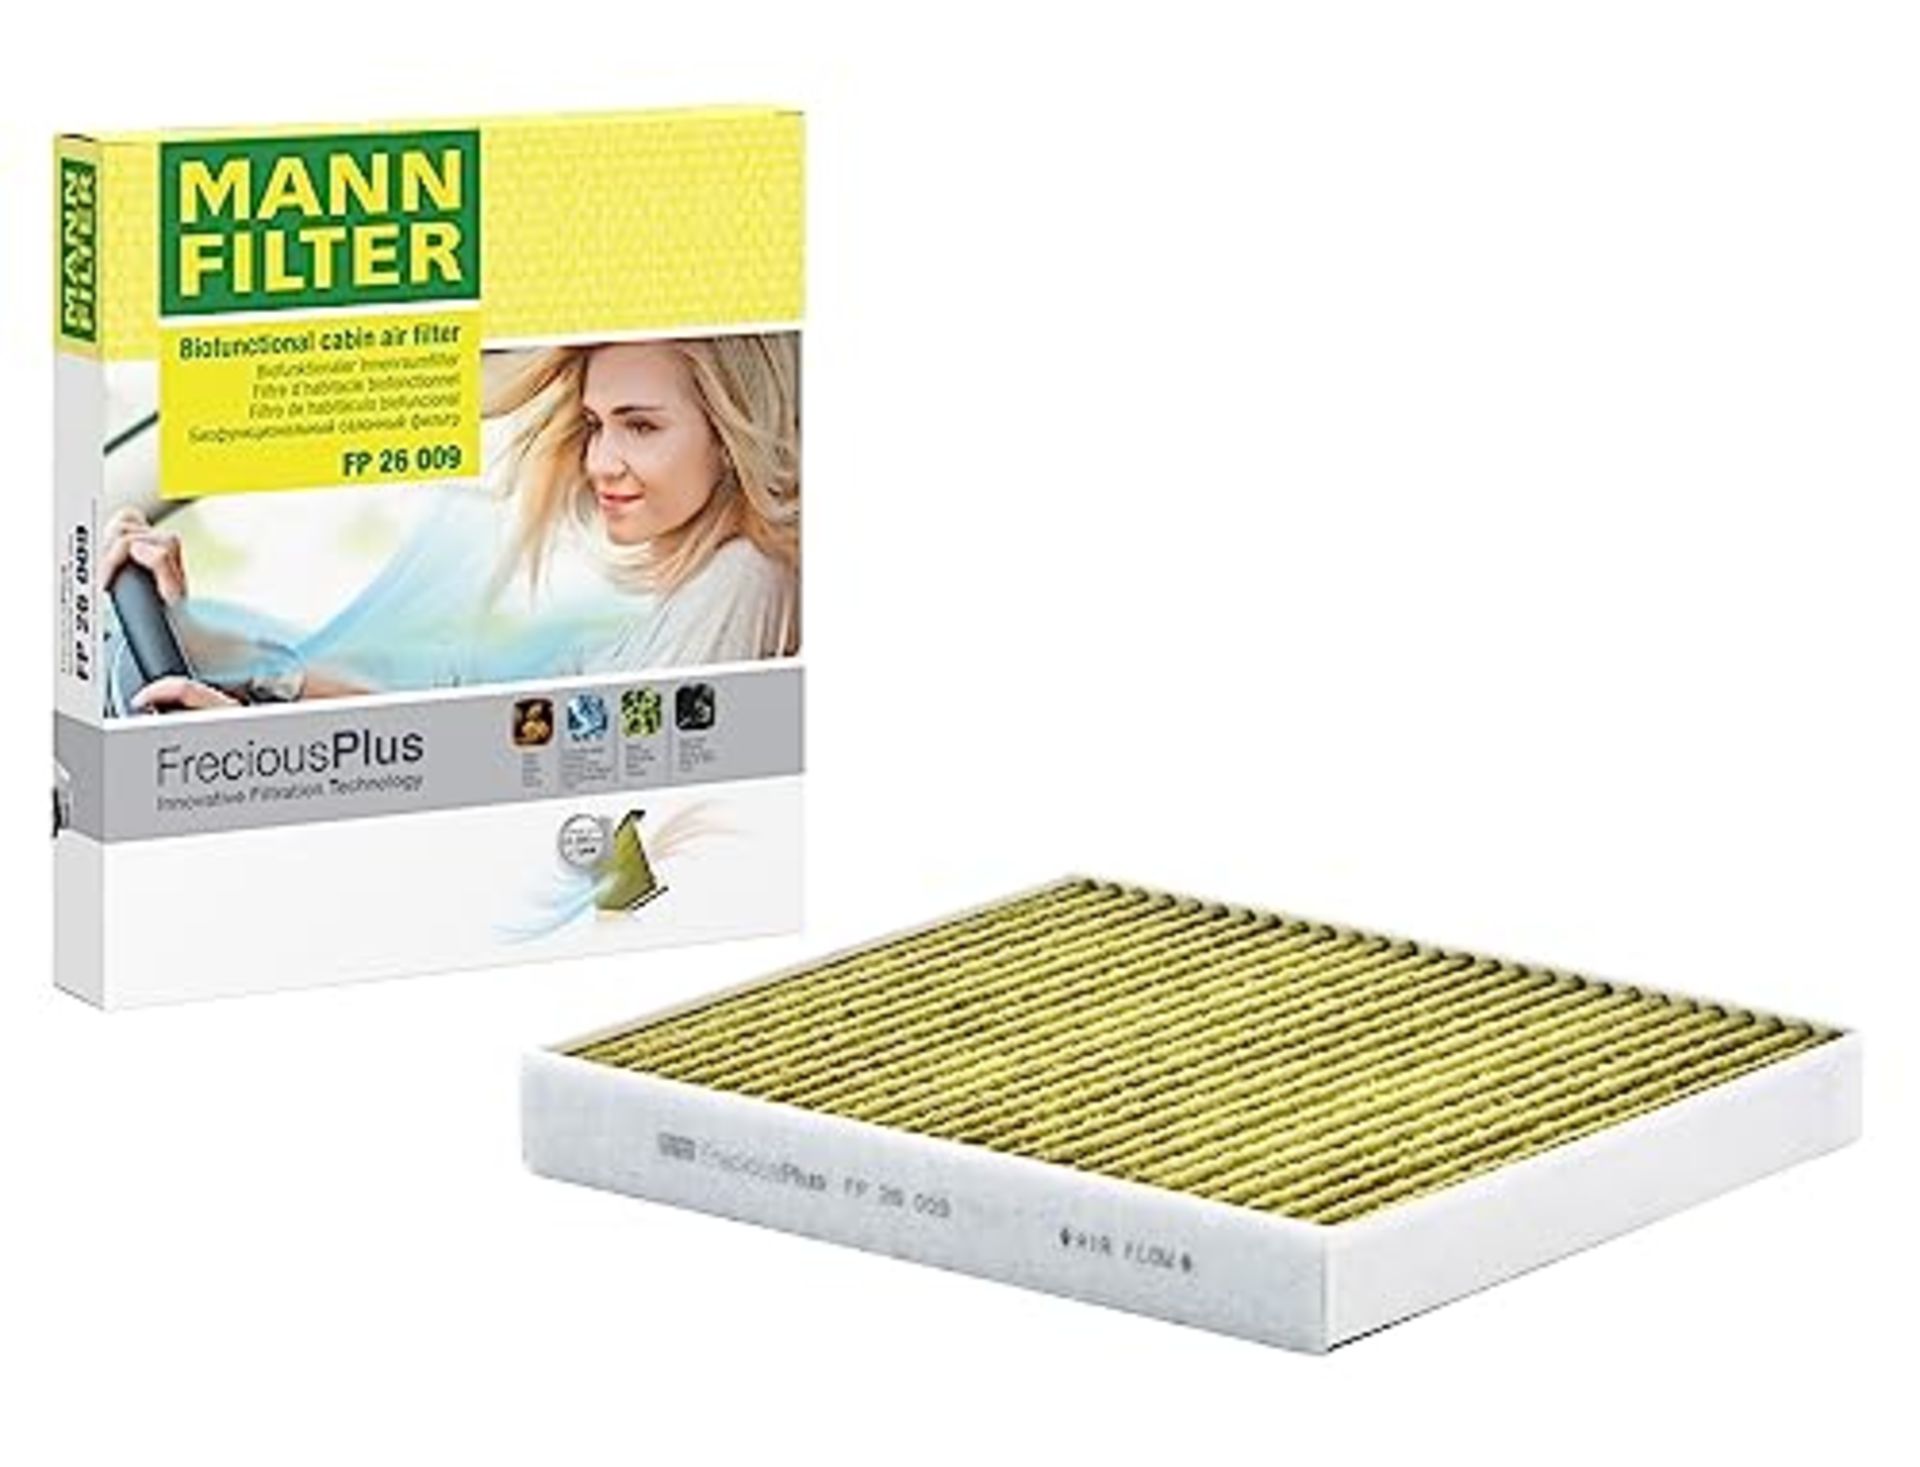 MANN-FILTER FP 26 009 Interior Filter FreciousPlus biofunctional pollen filter  For